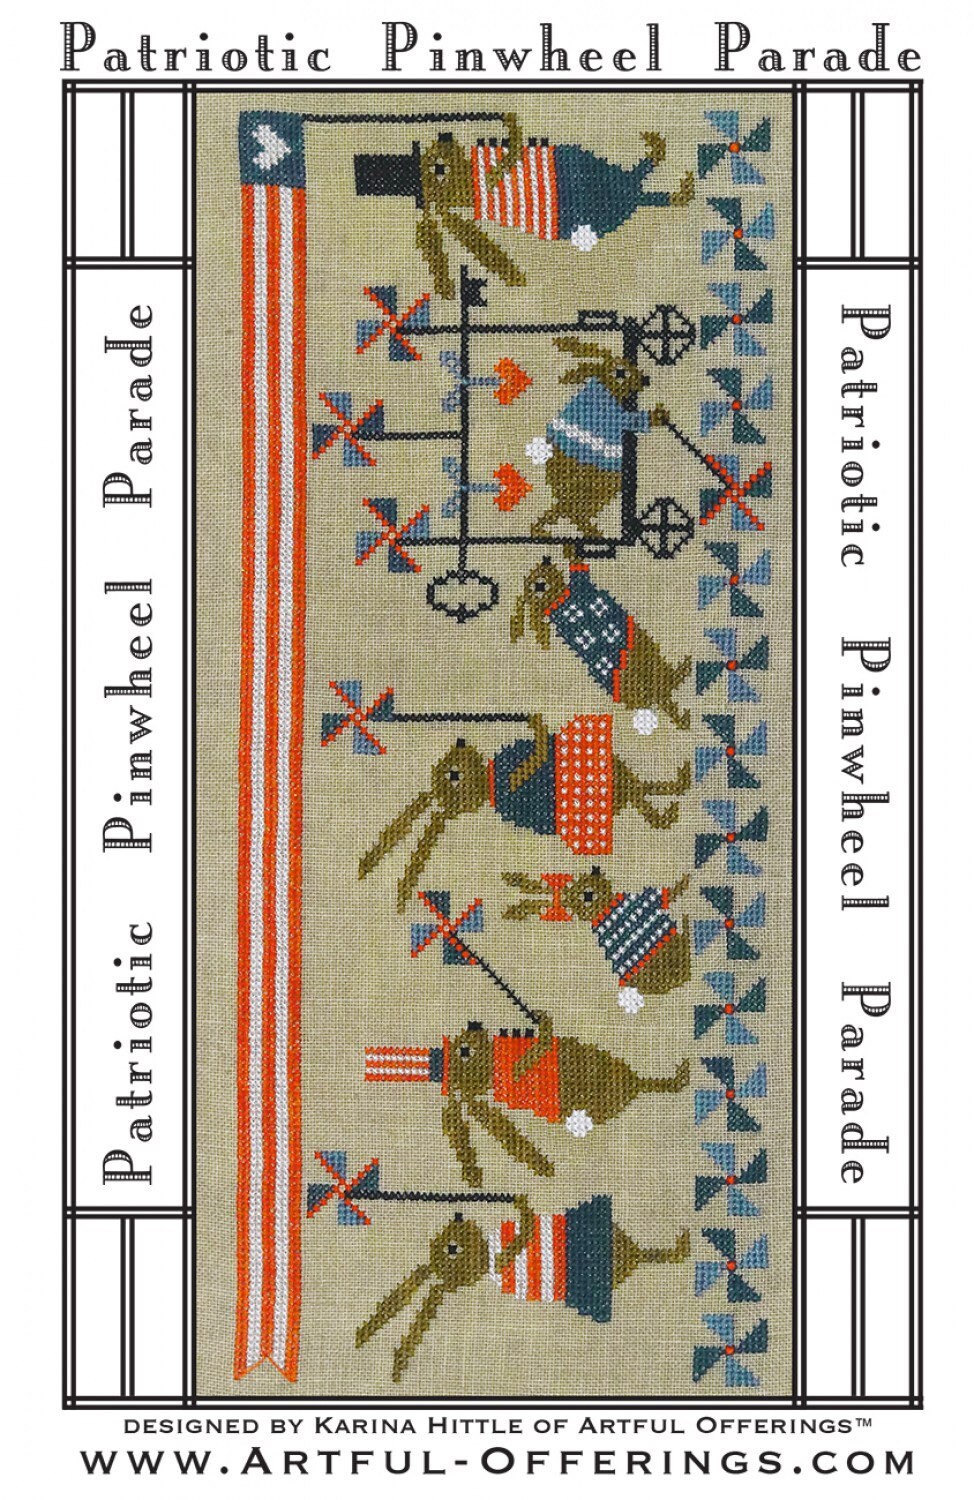 Patriotic Pinwheel Parade Cross Stitch Pattern - Artful Offerings - Karina Hittle